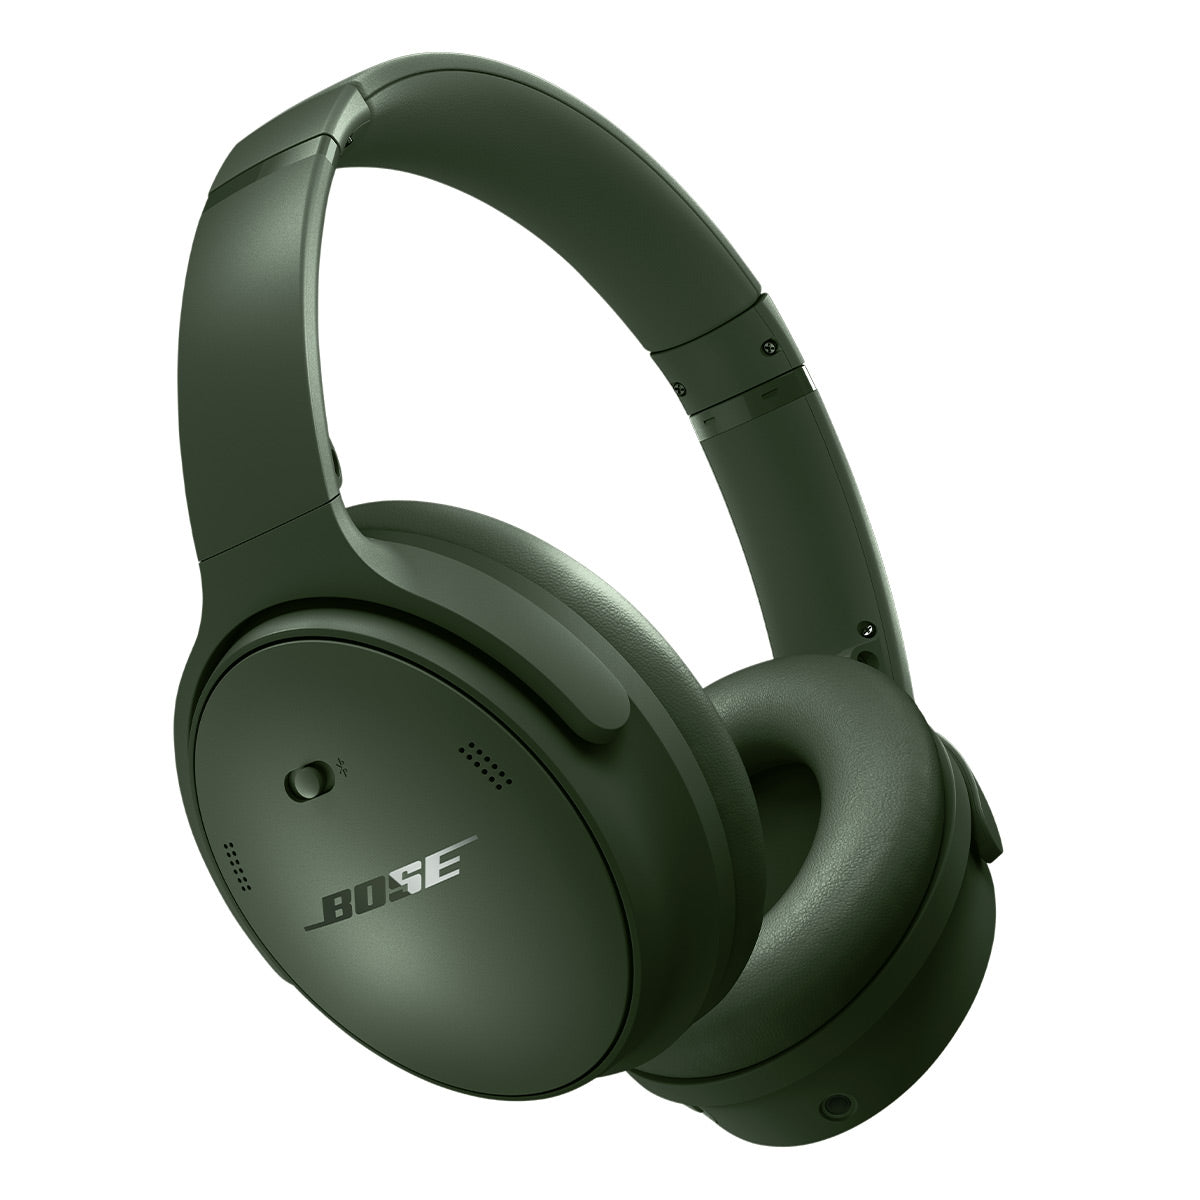 Bose Wireless Headphone Bundle with QuietComfort Ultra Wireless Noise Cancelling Headphones and QuietComfort Noise Cancelling Headphones (Black/Cypress Green)